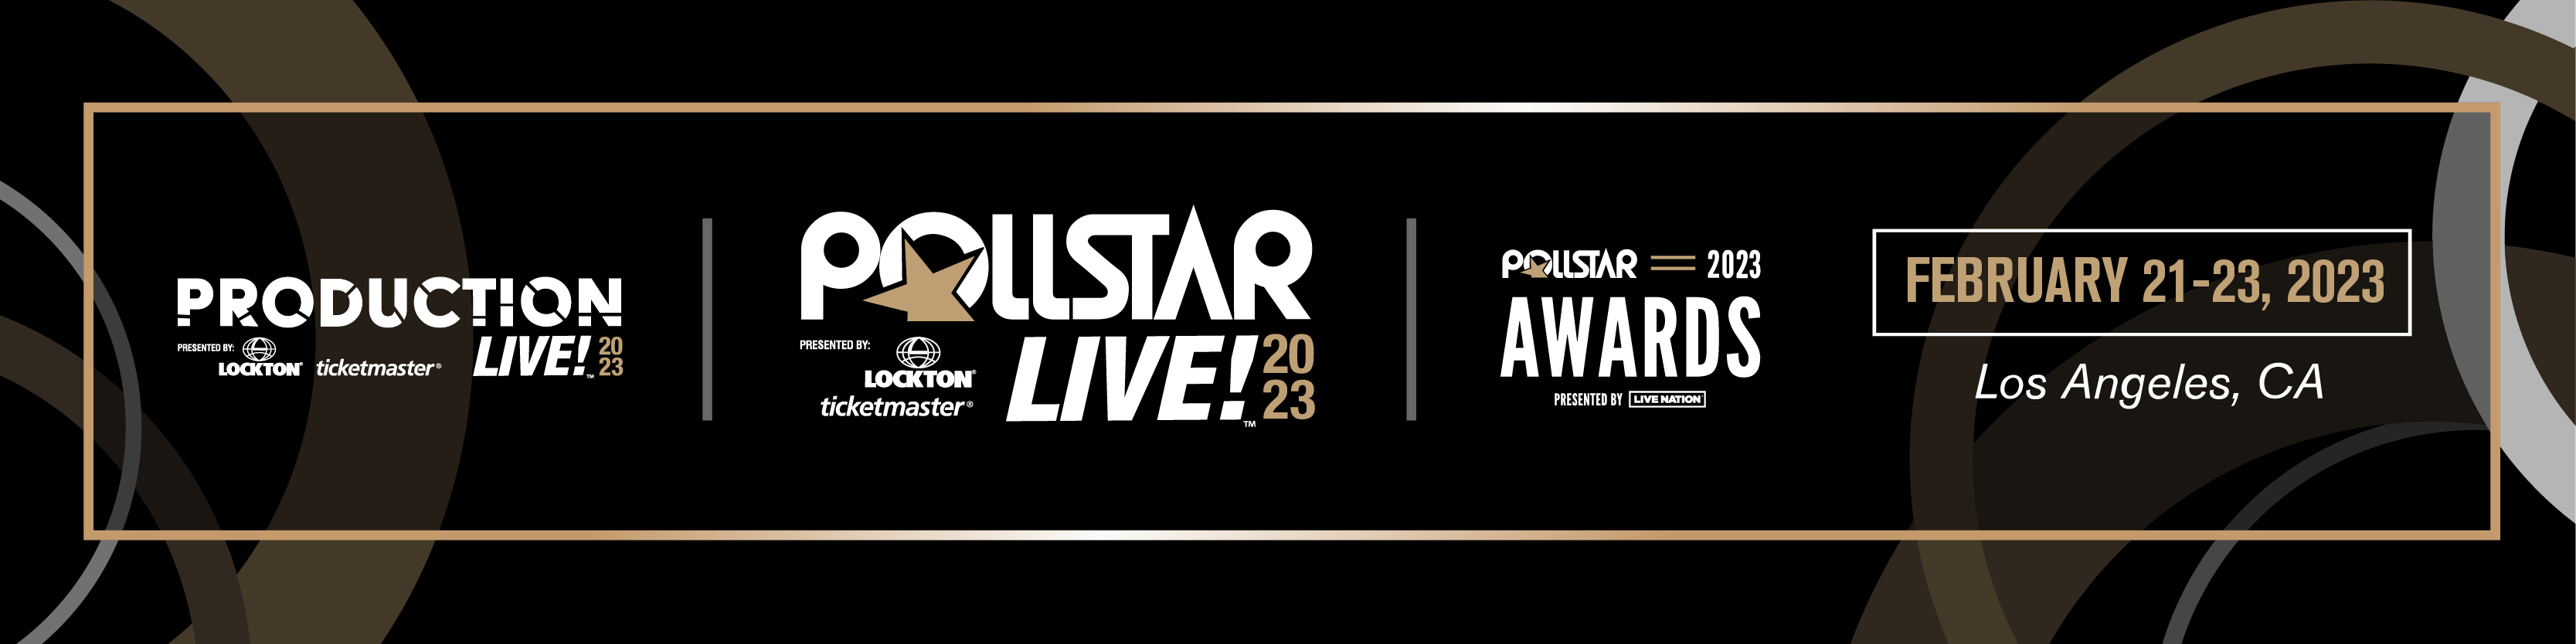 Pollstar Live! 2023